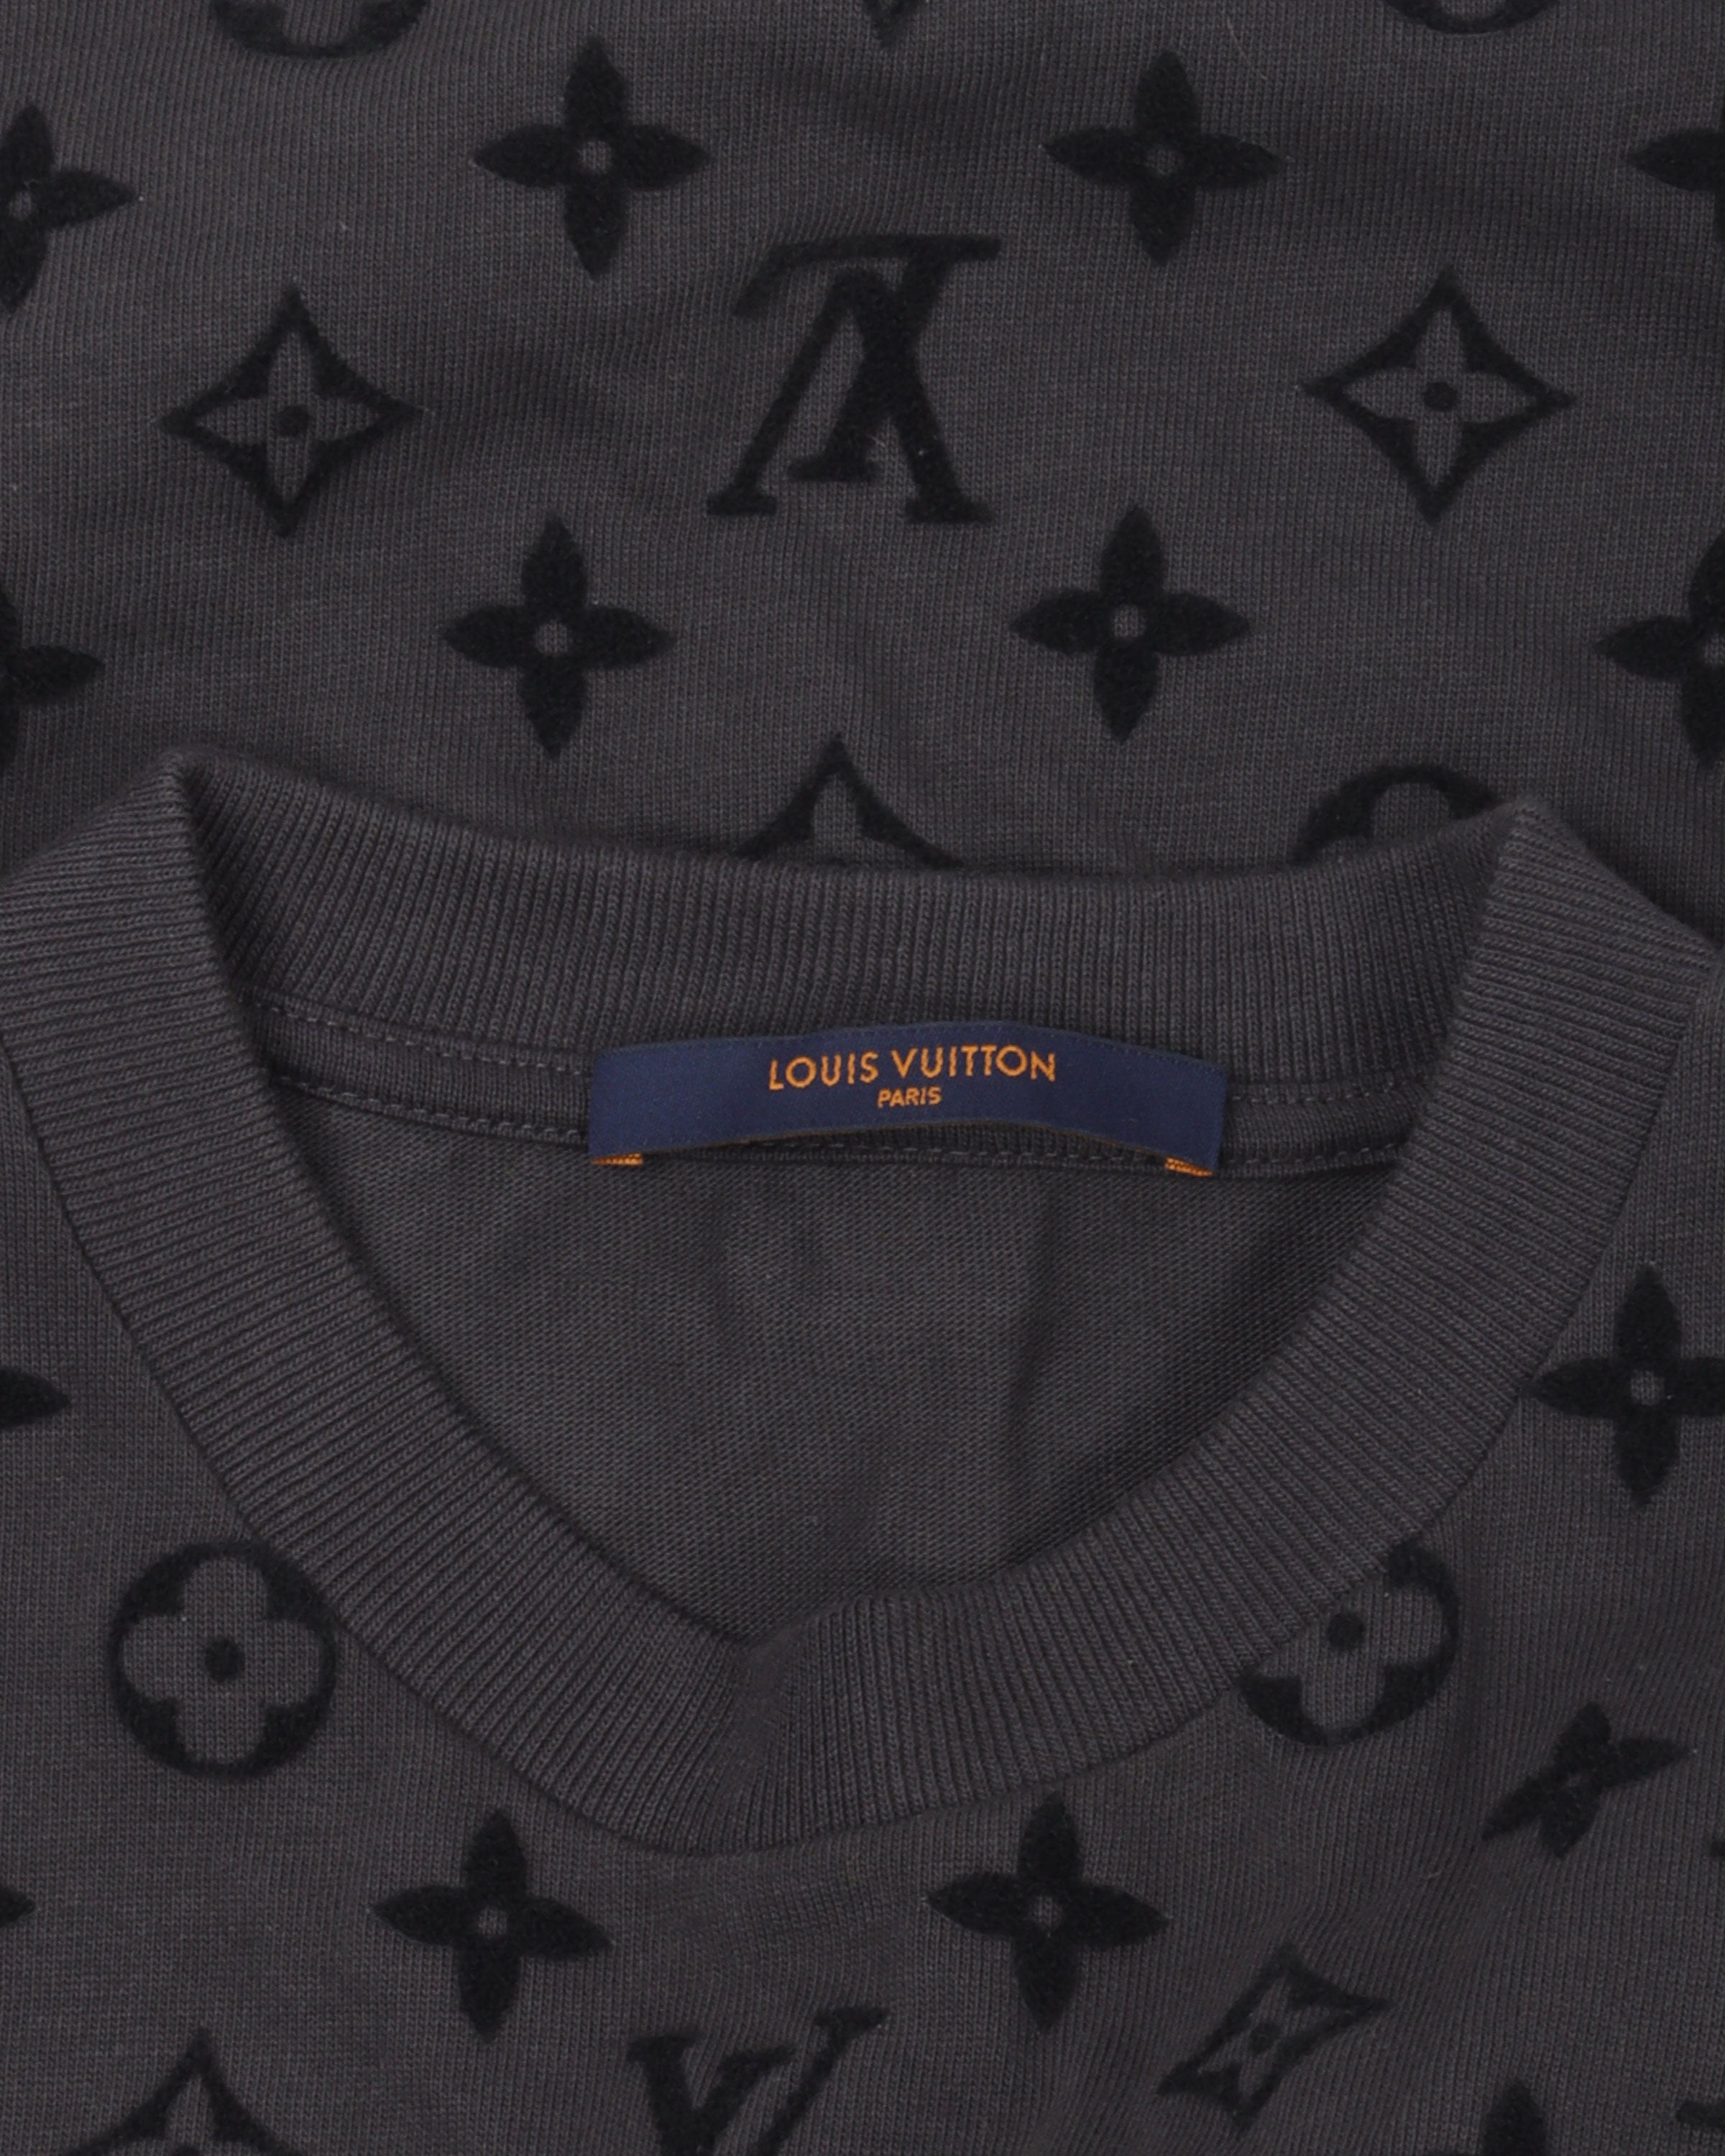 Louis Vuitton Monogram Pocket Knit T-Shirt 